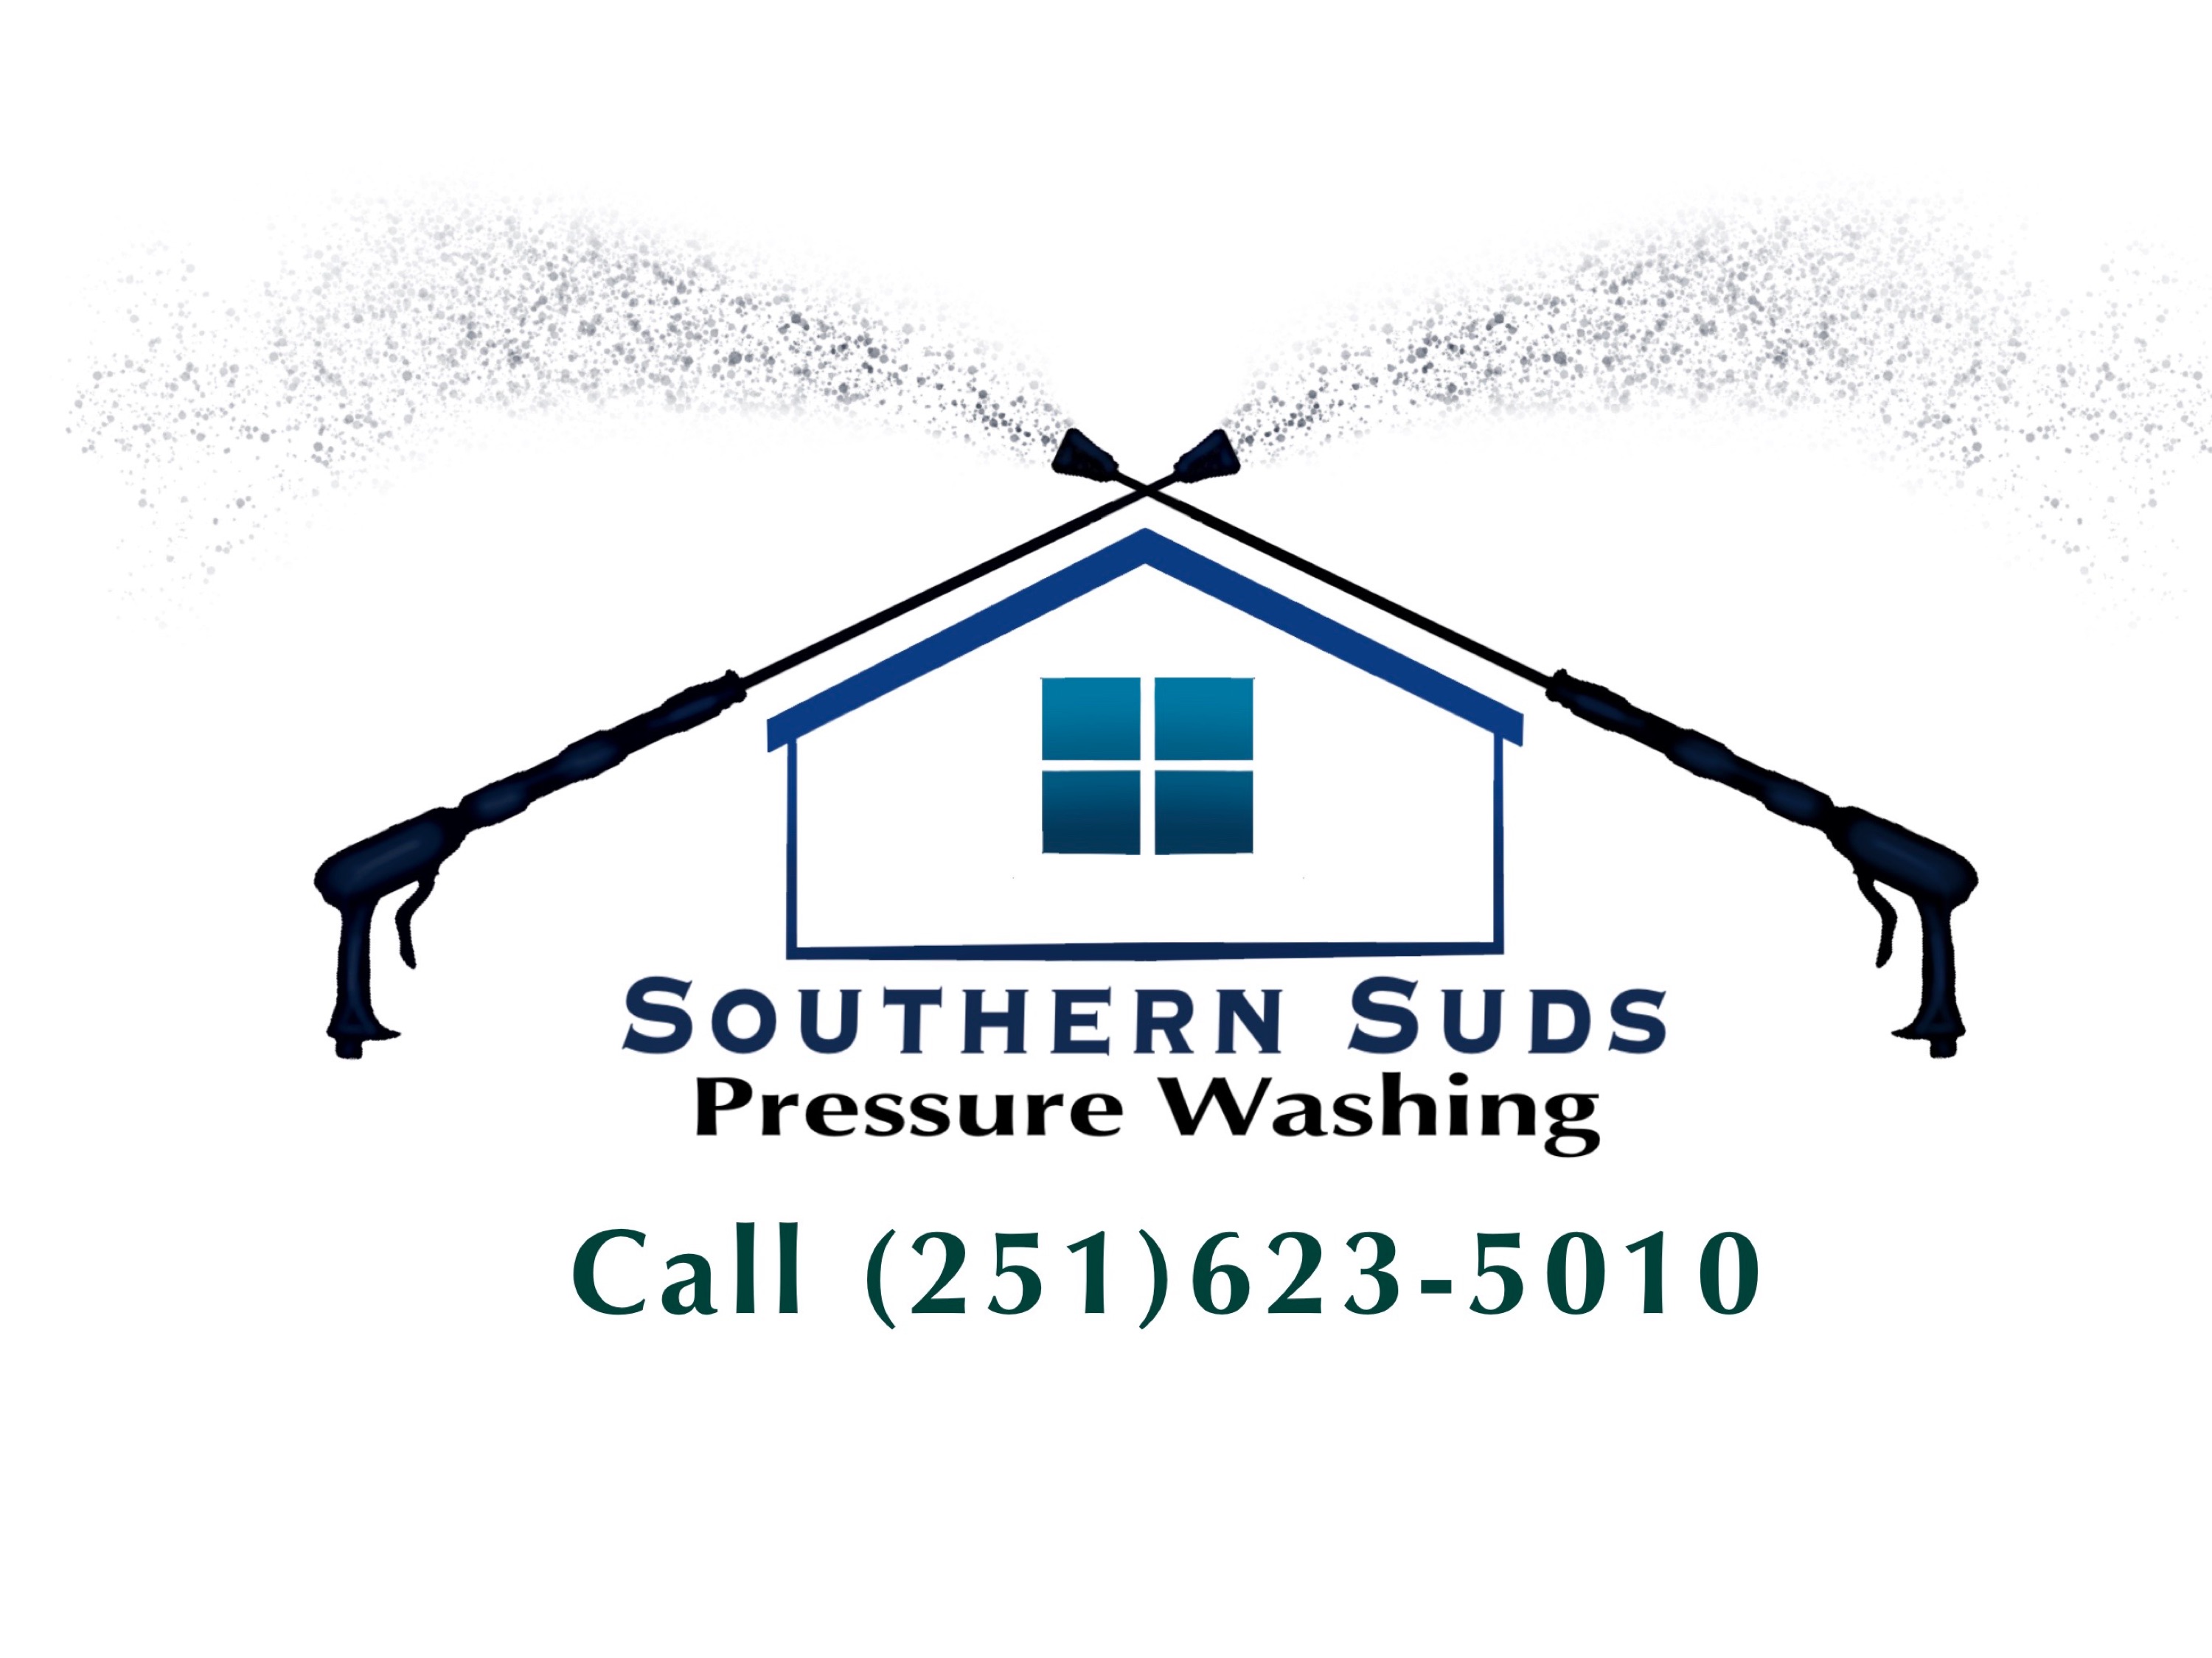 Southern Suds Pressure Washing Logo